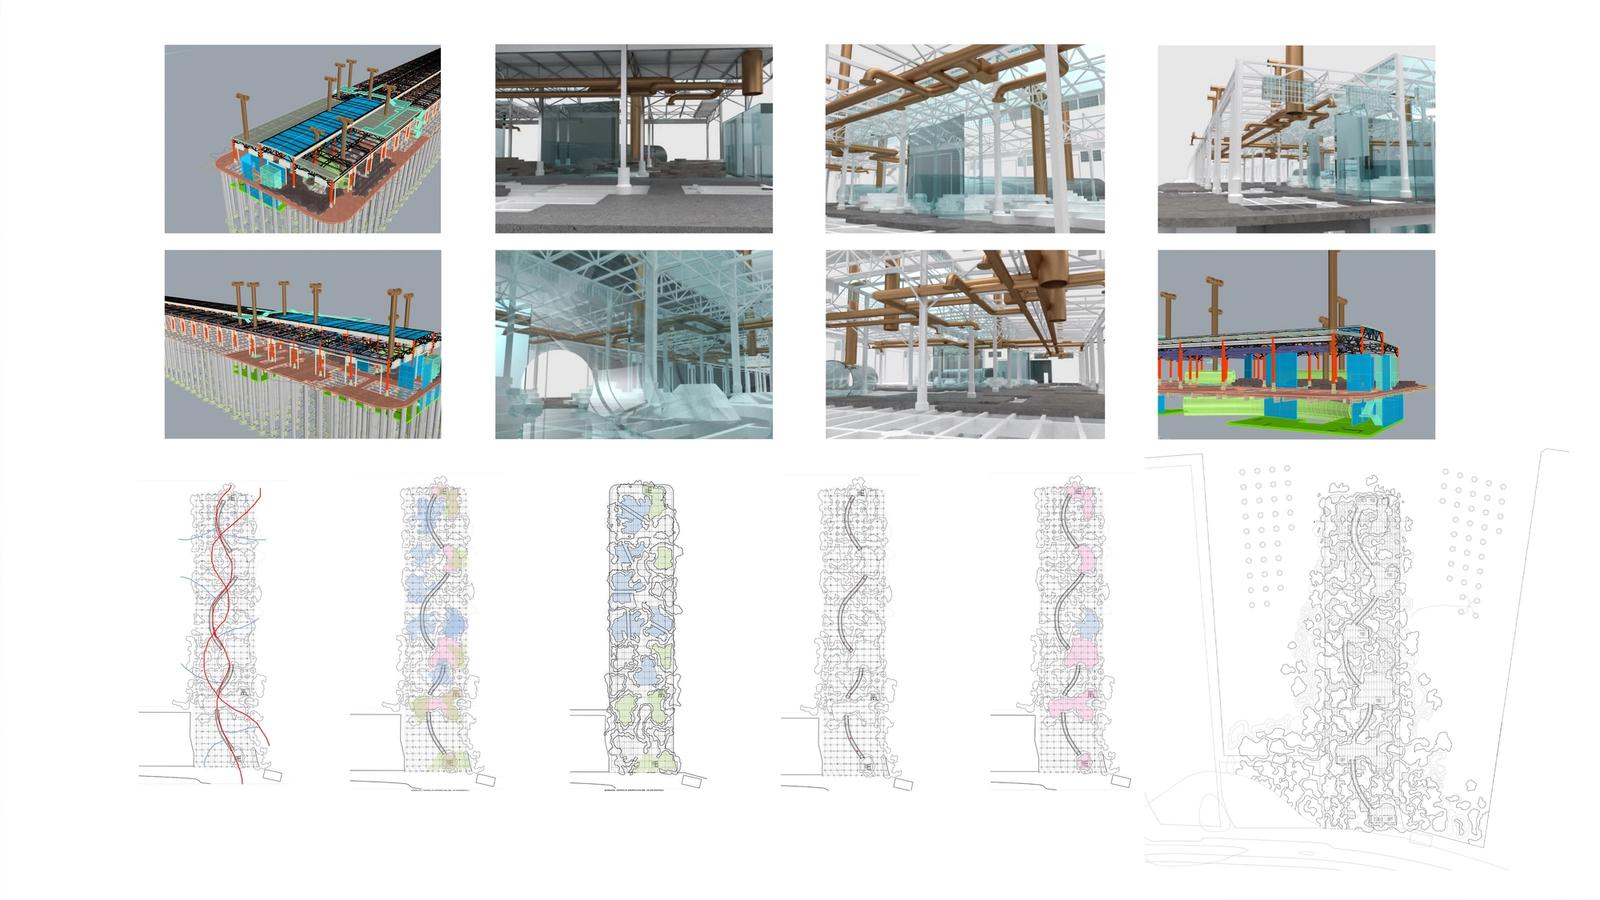 Self Generating Architecture - Aquarium and Research-Development Center - Design Process